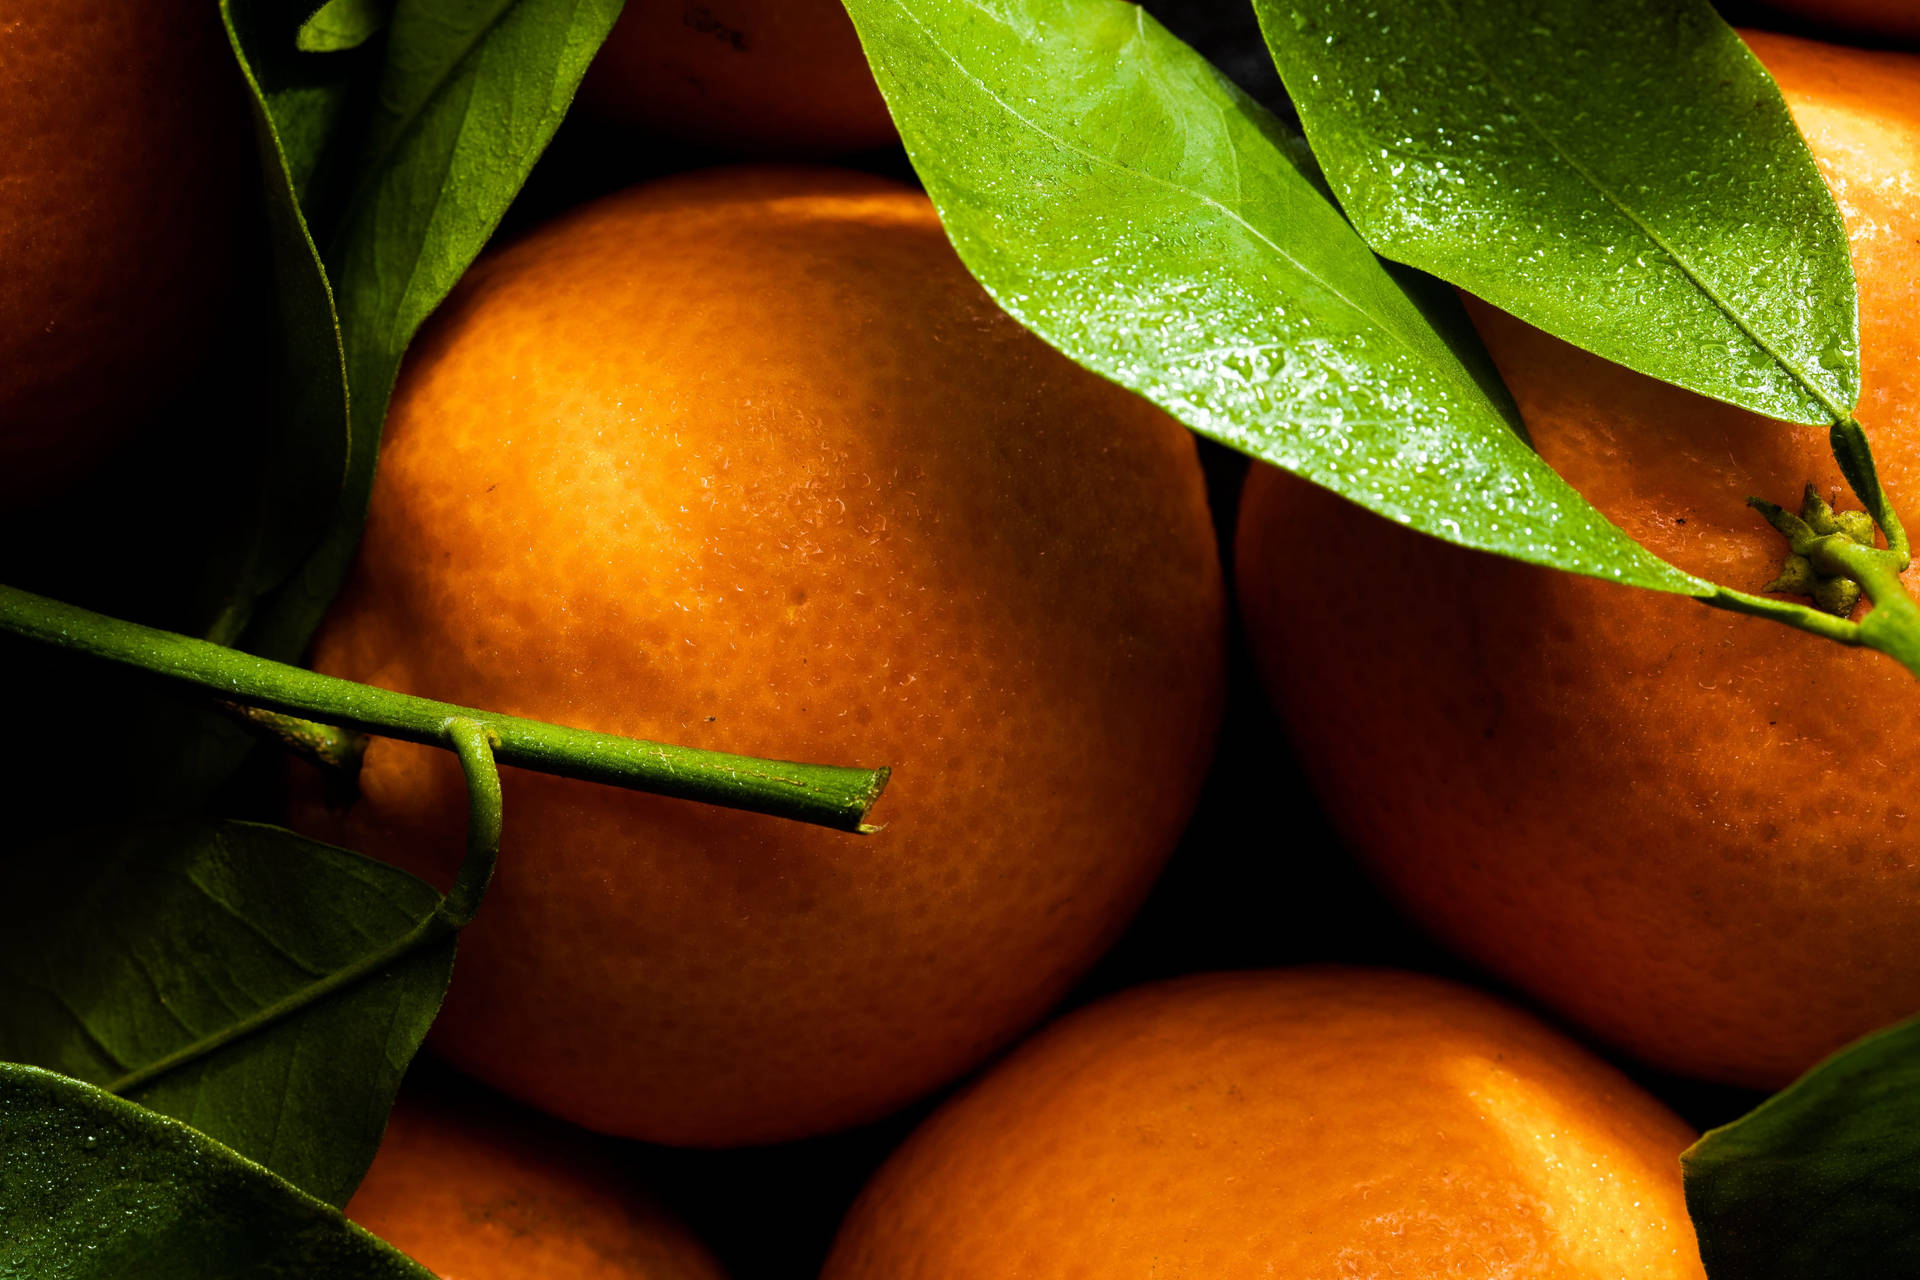 Fresh Clementine Citrus Fruits Close-up View Wallpaper